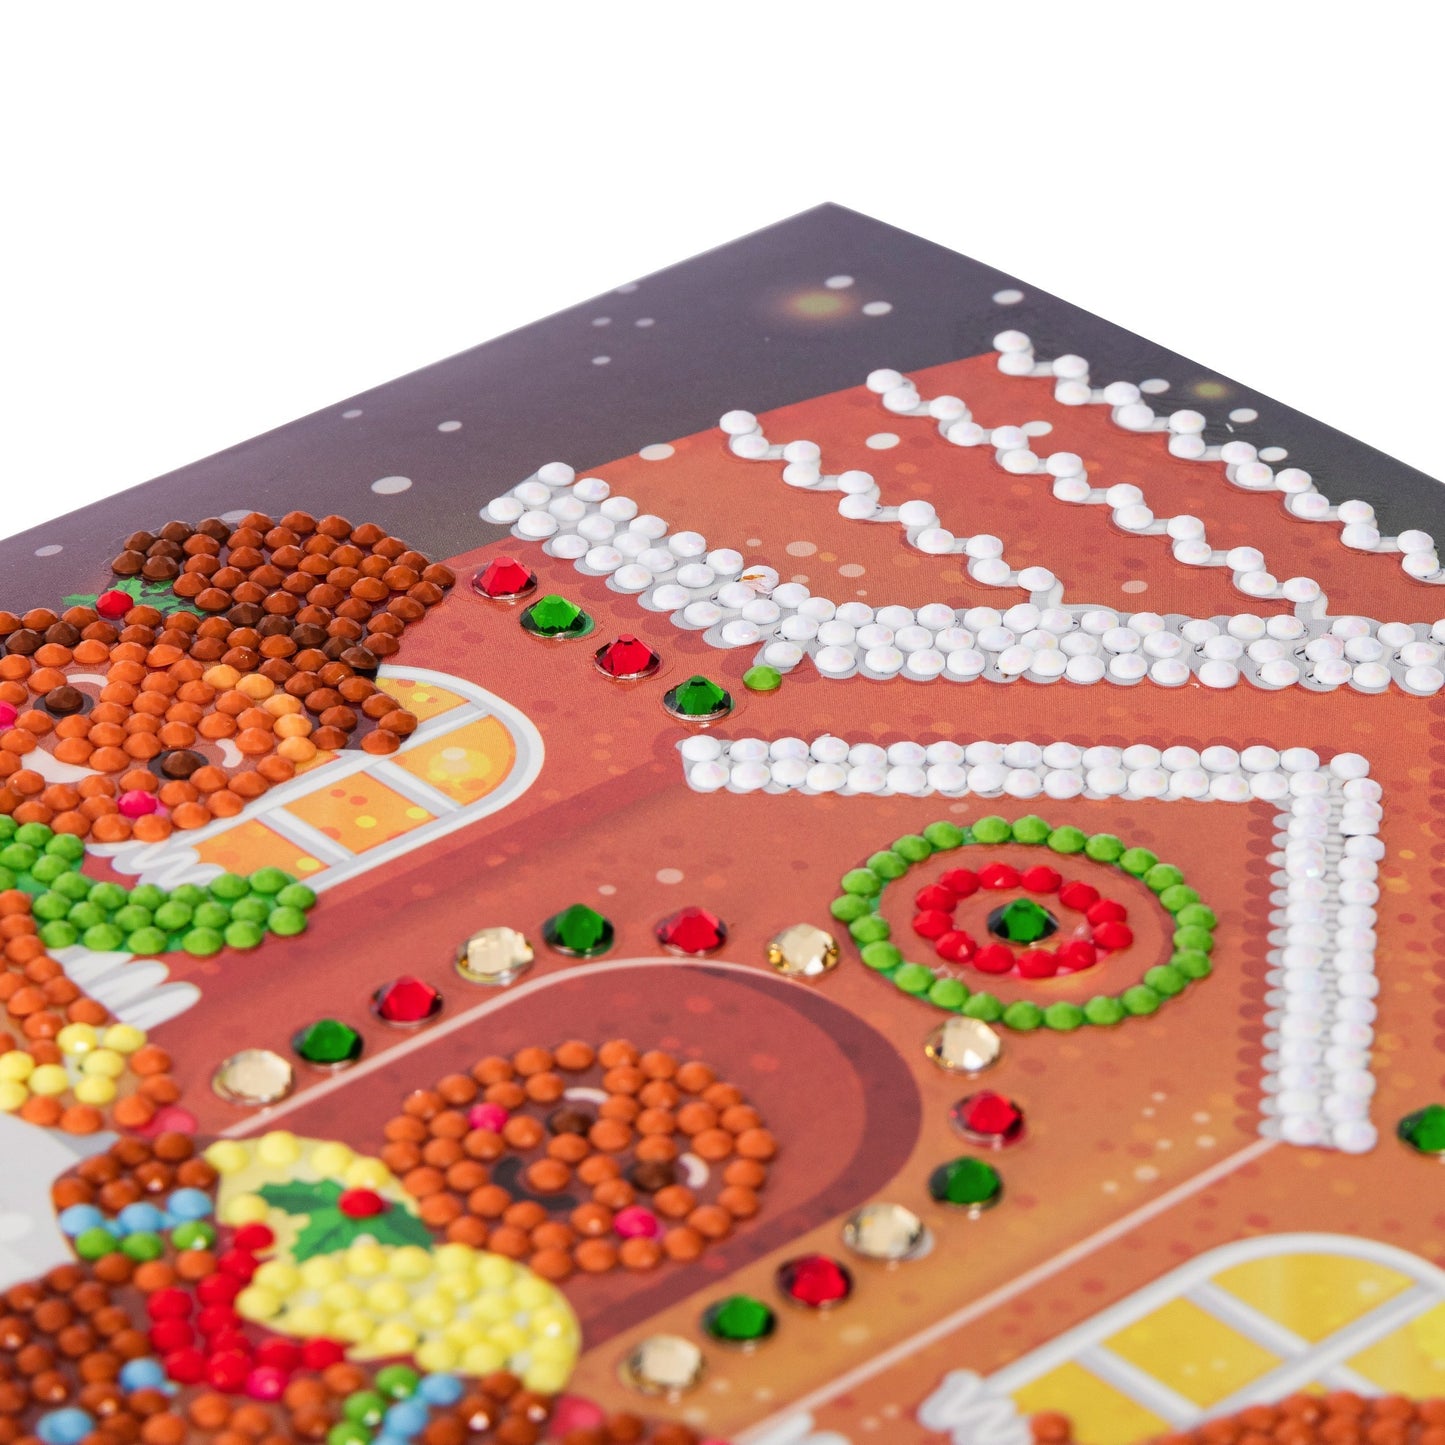 CCK-XM32: "Gingerbread Family" Crystal Art Card Kit